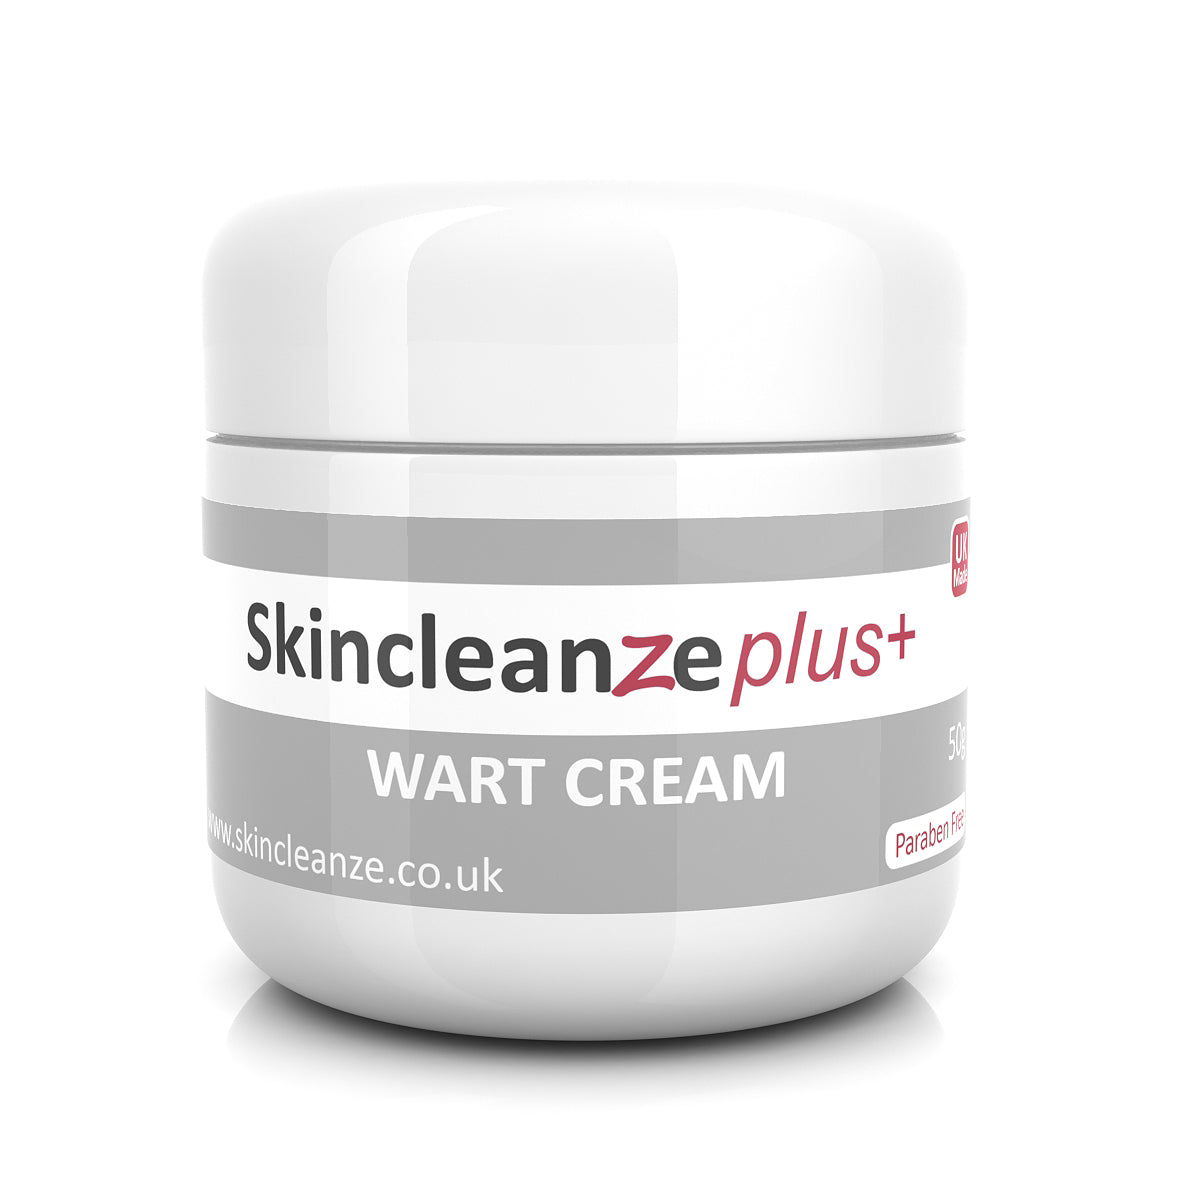 Skincleanze plus+ Wart & Verruca Cream Double Strength (50g)